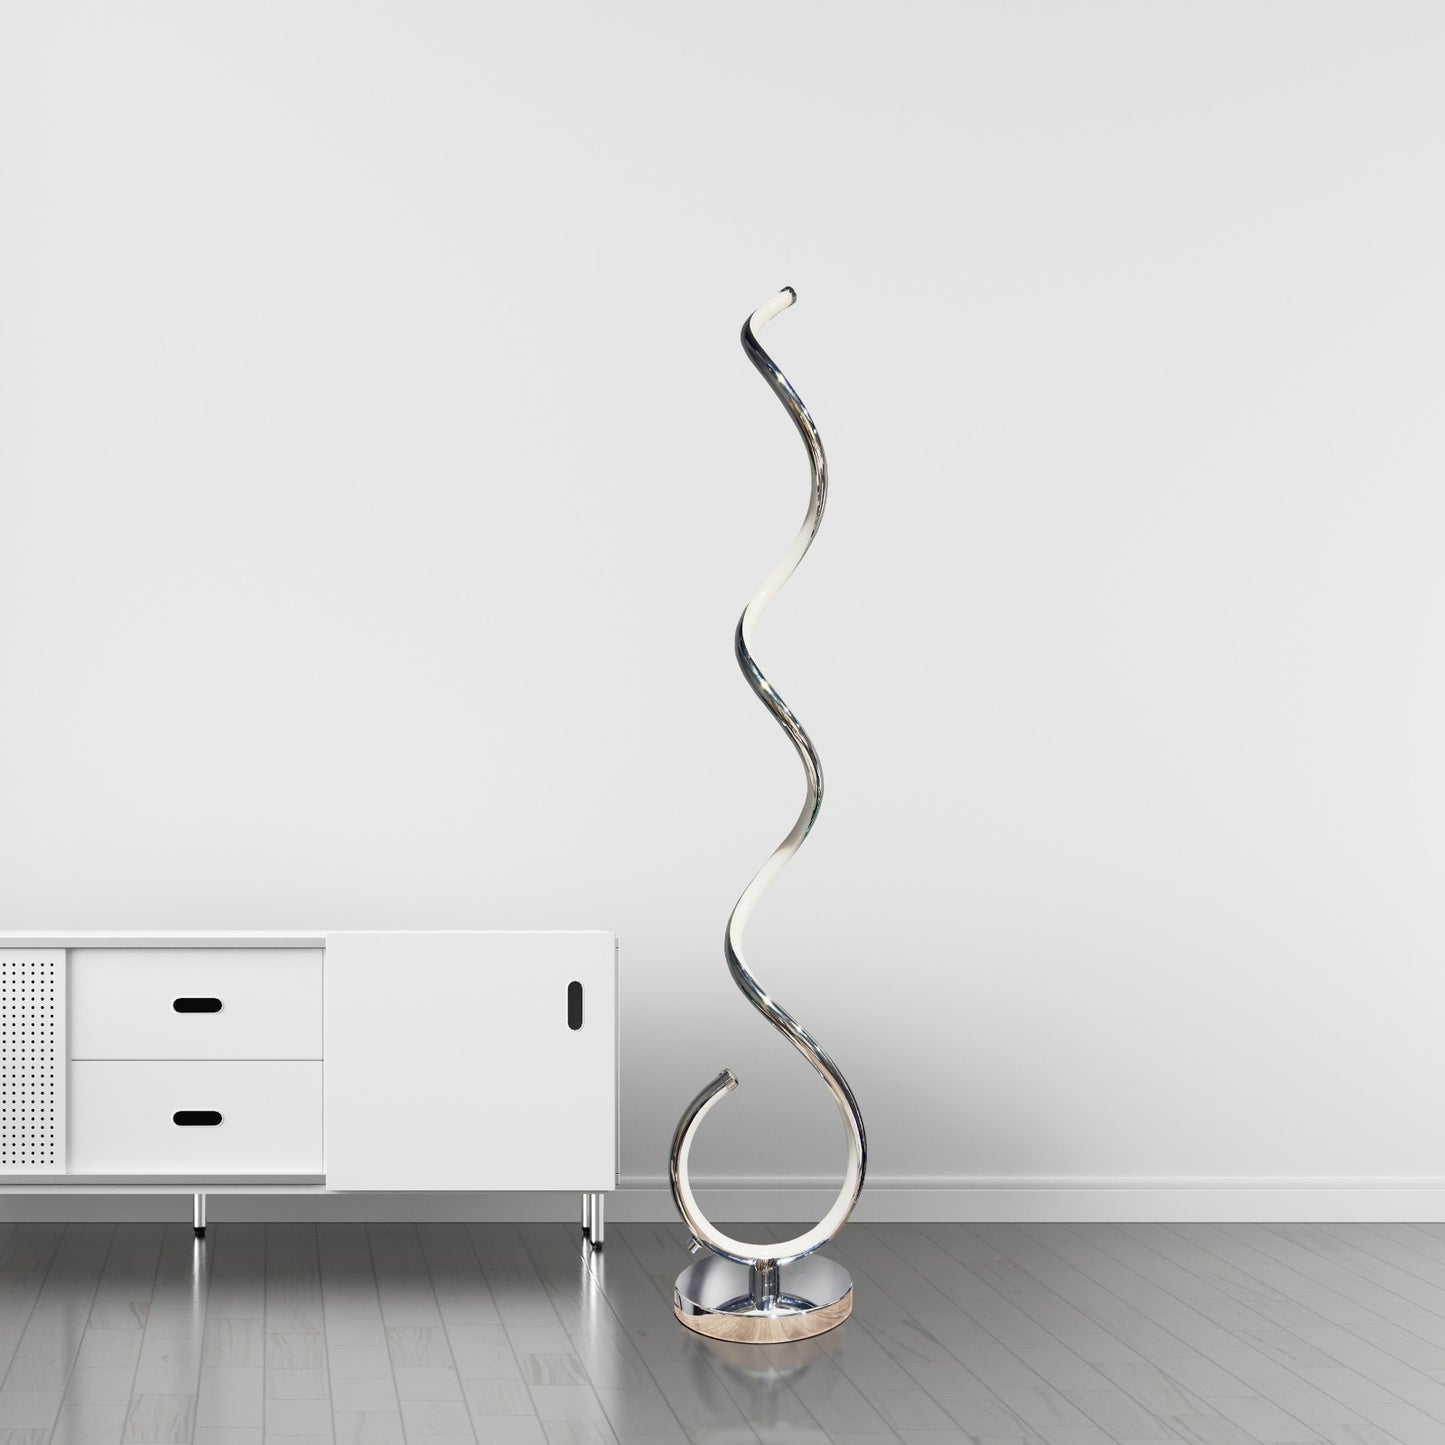 HOCC LED Arc Floor Lamp,LED Nordic Creative Design Living Room Floor Lamp Modern Simple Bedroom Study Room Gourd Floor Lamp [Energy efficiency class A ++] (Black)…